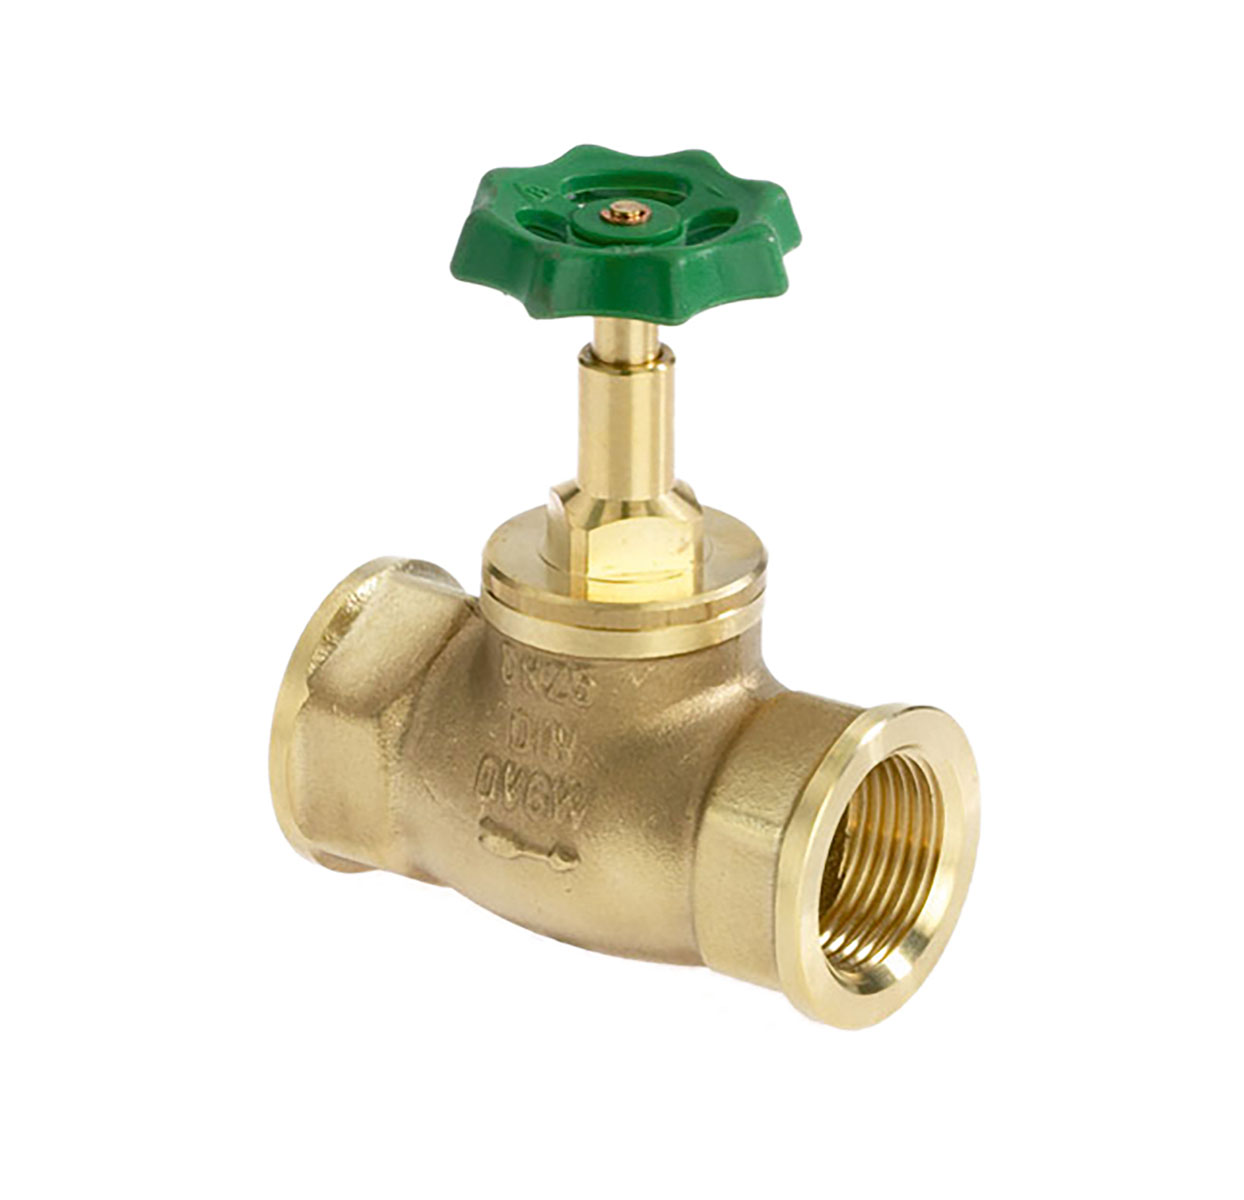 1300250 - CR-Brass Globe valve without drain valve, rising